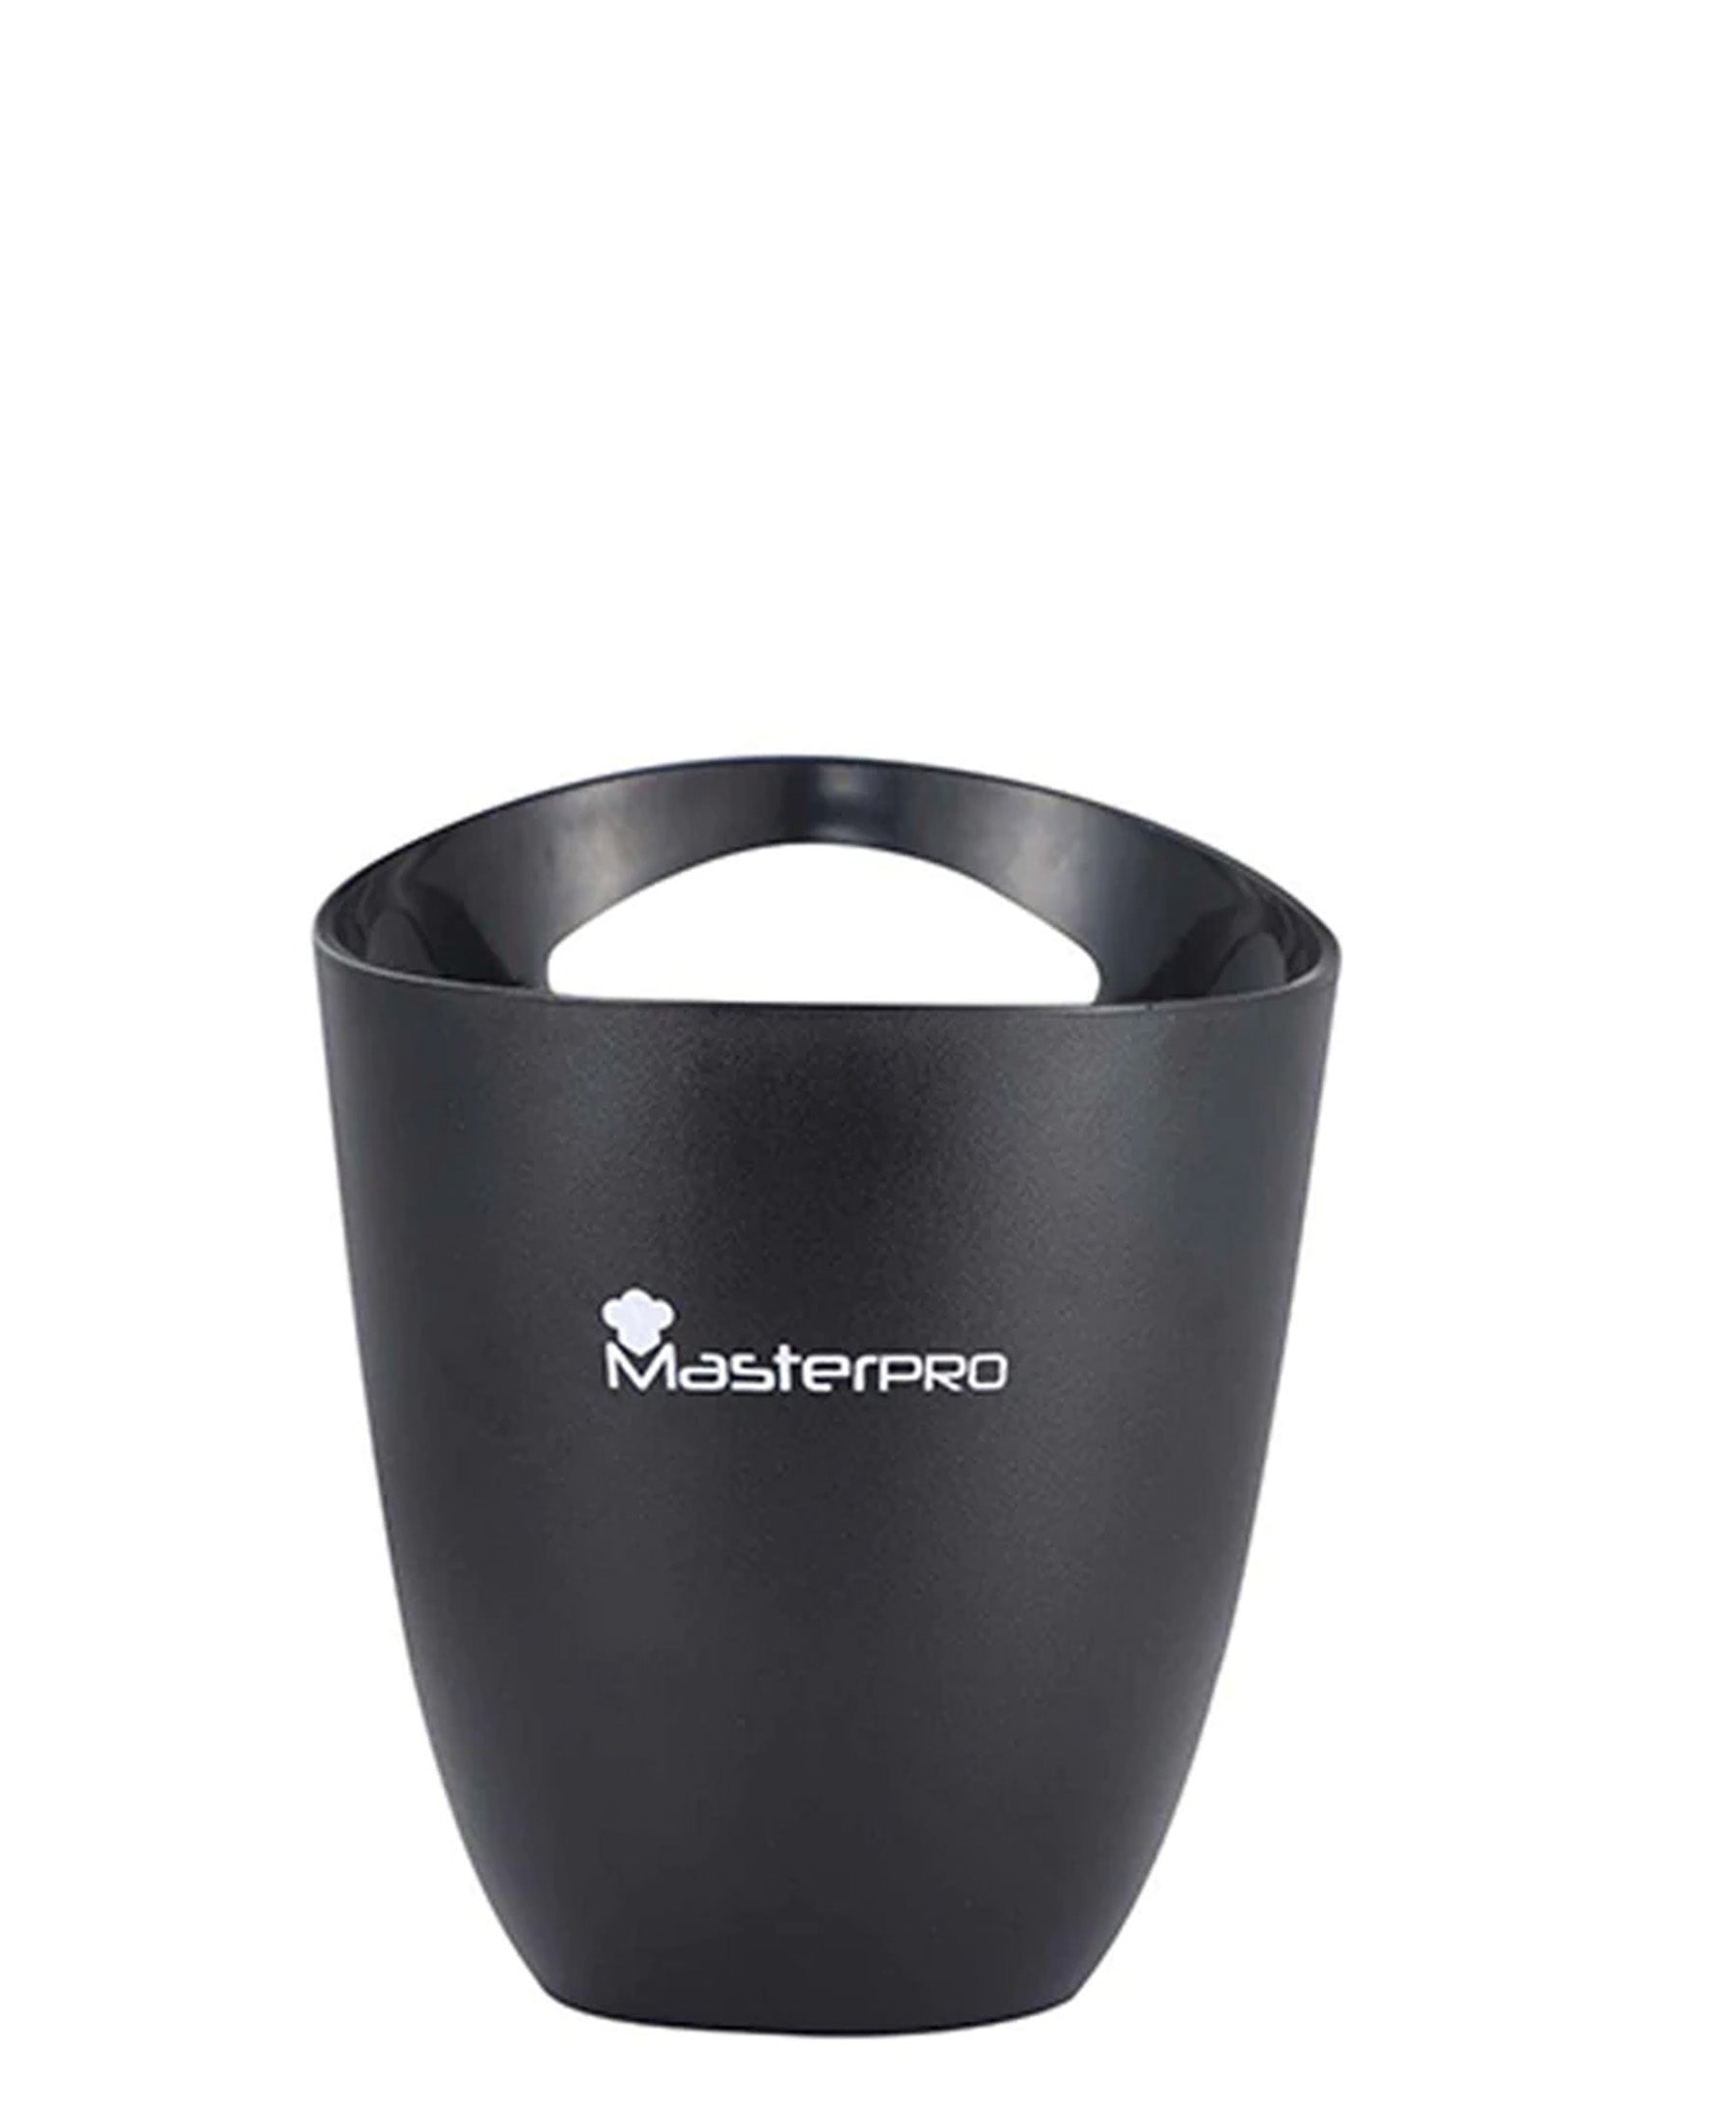 Masterpro 3.5L Plastic Ice Bucket - Black